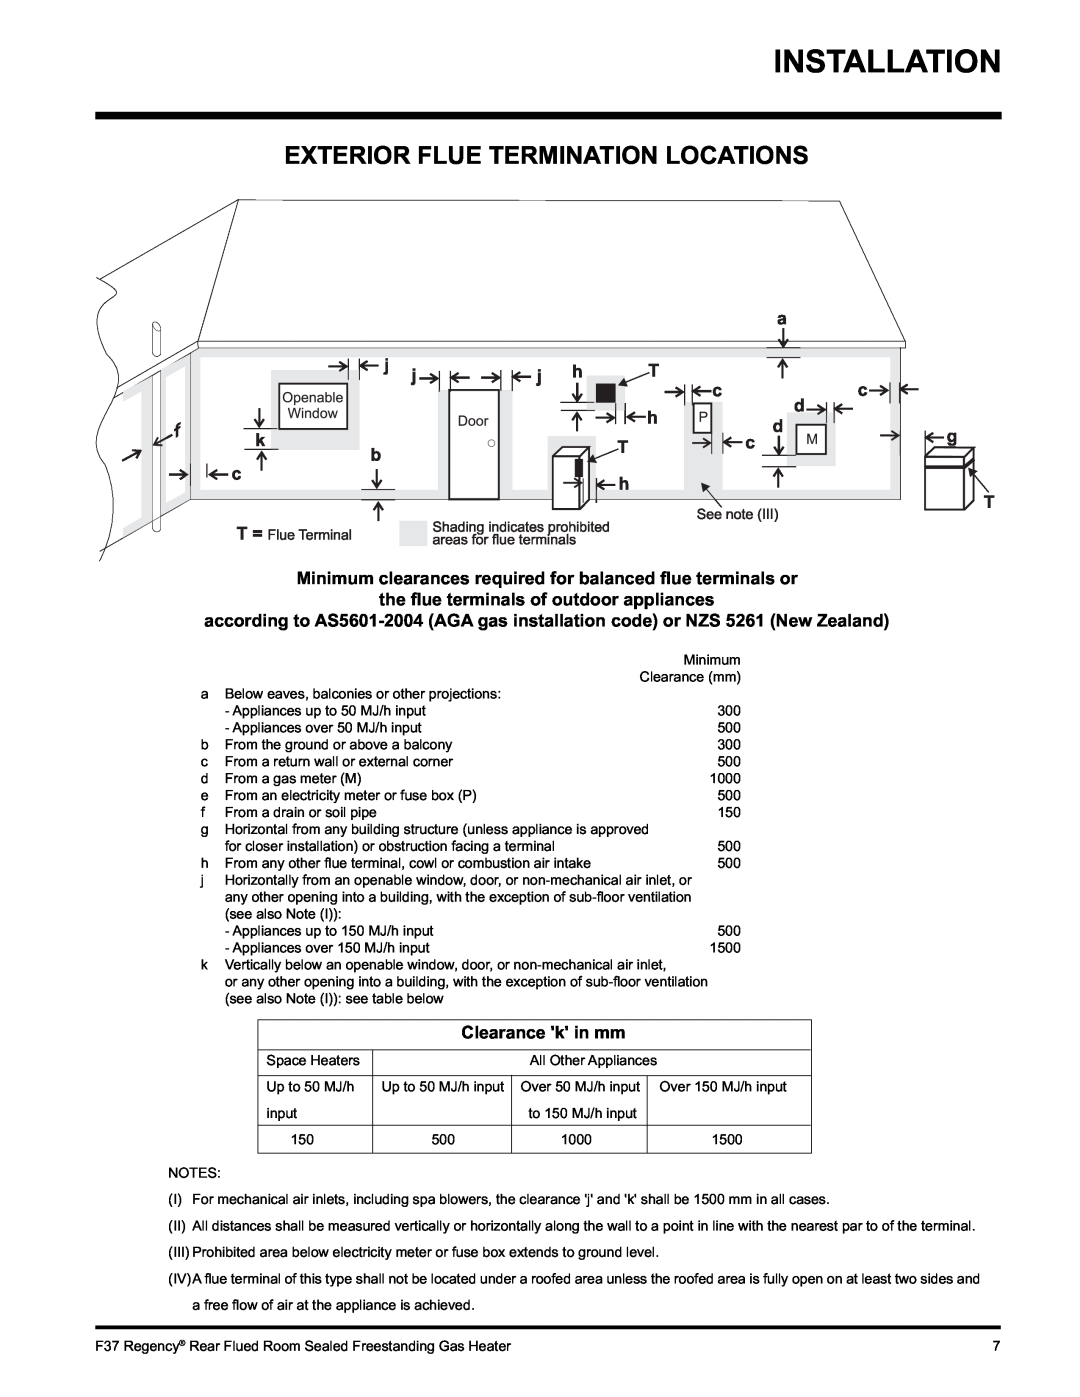 Regency F37-LPG, F37-NG Exterior Flue Termination Locations, Installation, the ﬂue terminals of outdoor appliances 